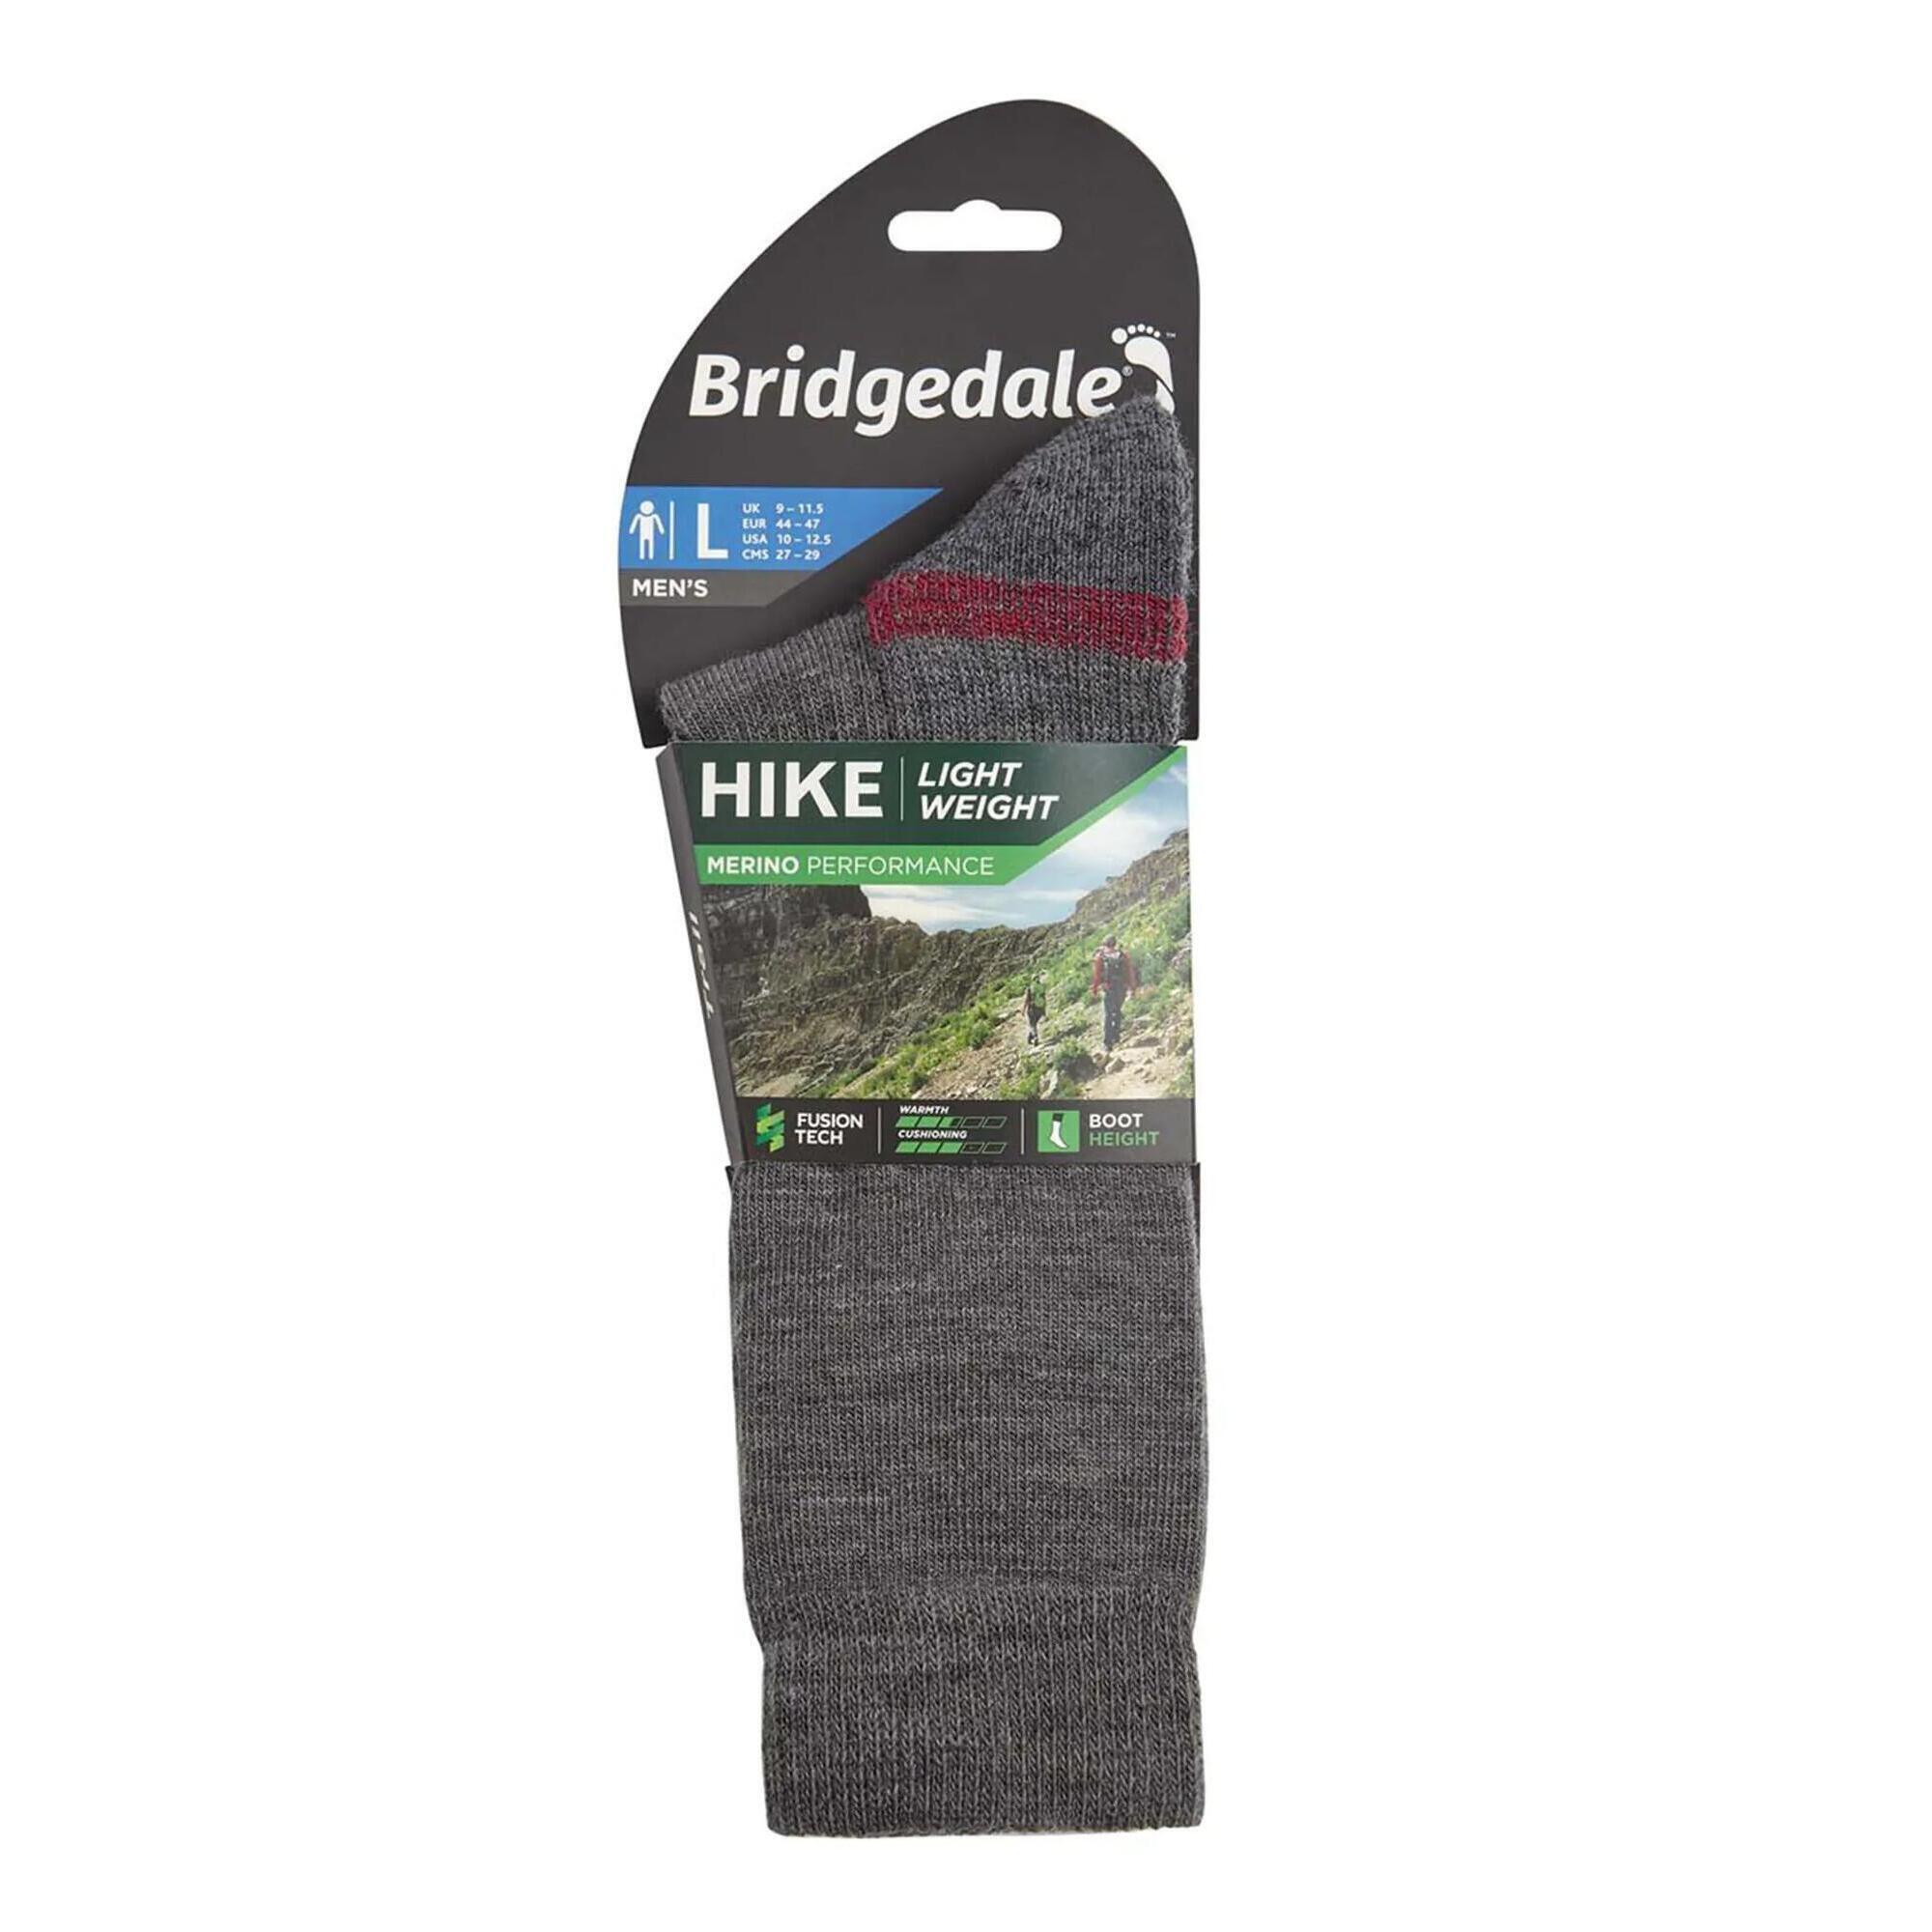 BRIDGEDALE HIKE Lightweight Merino Performance Boot Original Men's - Grey